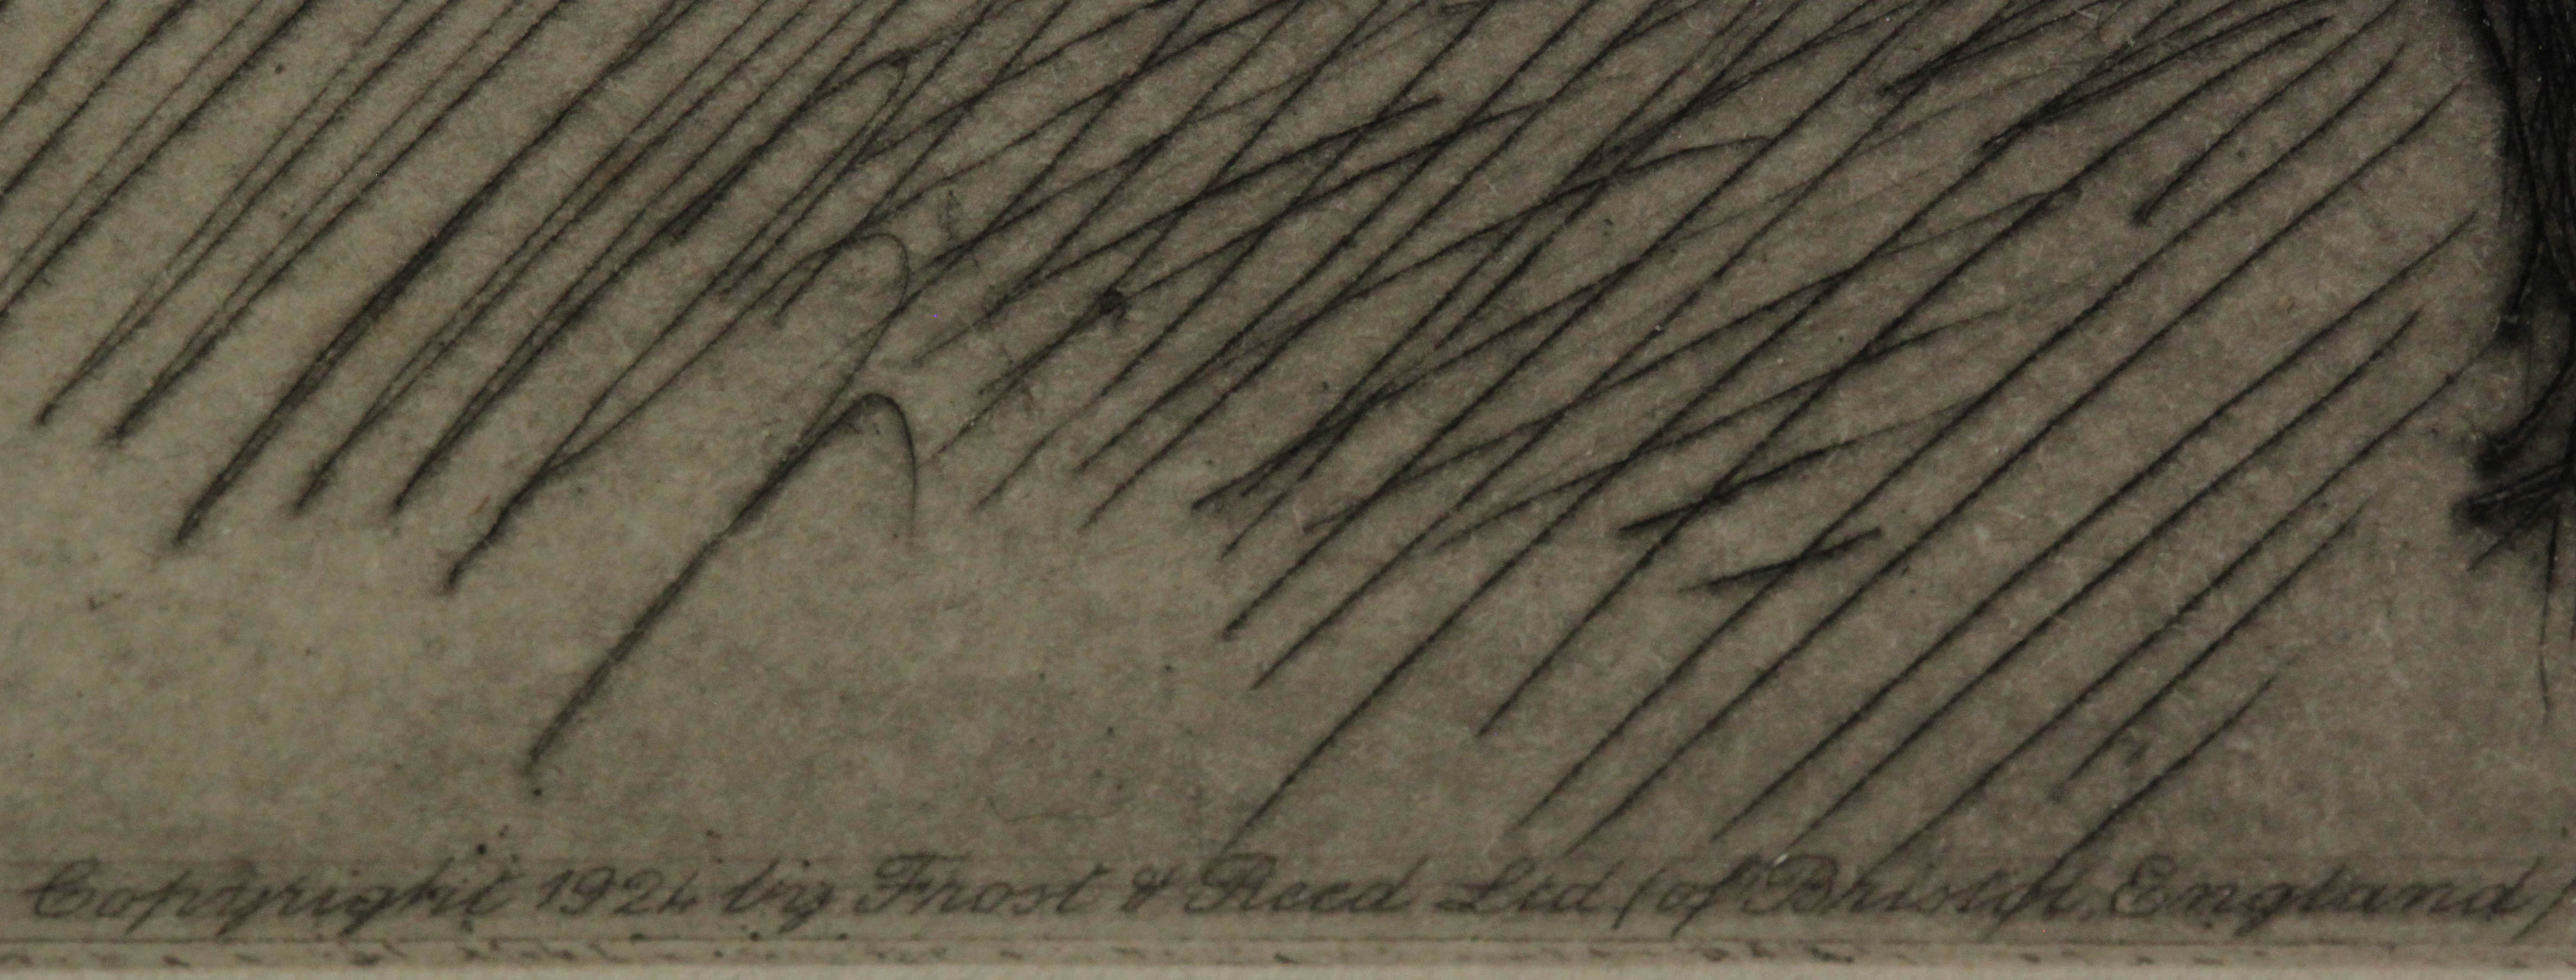 Click for larger image: Scottish Deerhound etching by Herbert Thomas Dicksee signature - Scottish Deerhound etching by Herbert Thomas Dicksee signature